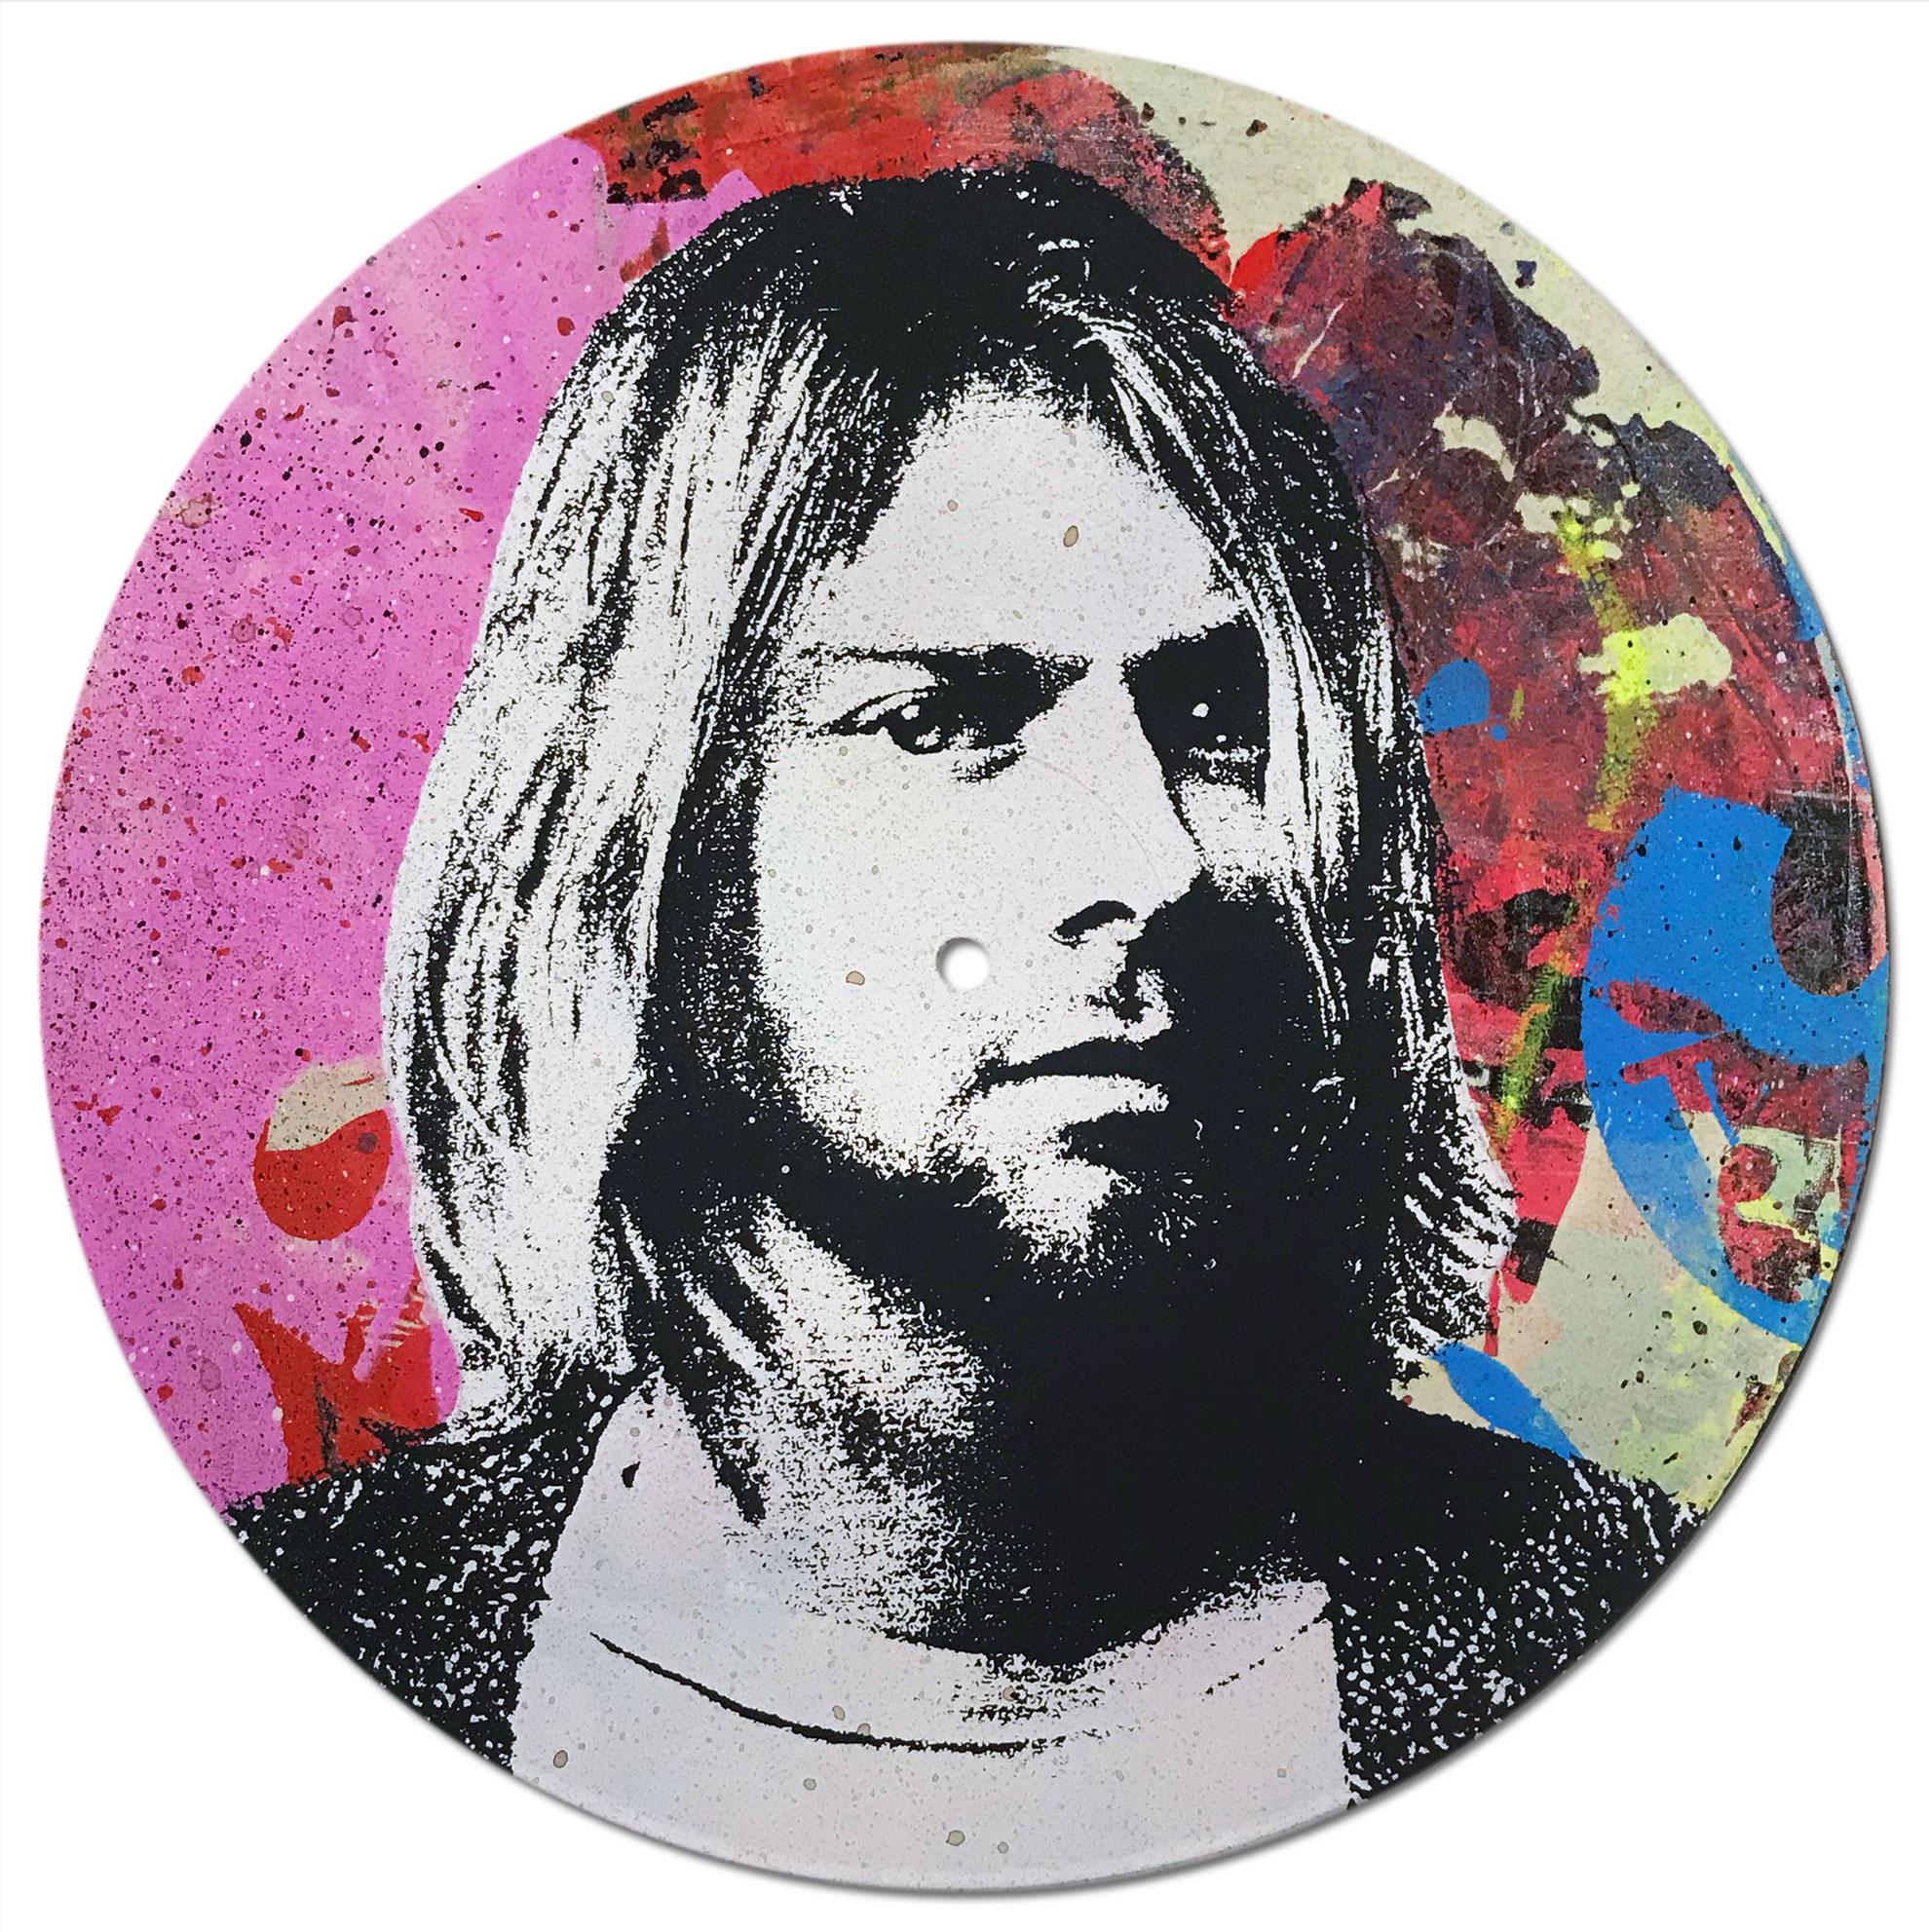 Kurt Cobain Vinyl 1-10, Greg Gossel Pop Art LP Record (Singles & Sets Available) For Sale 2